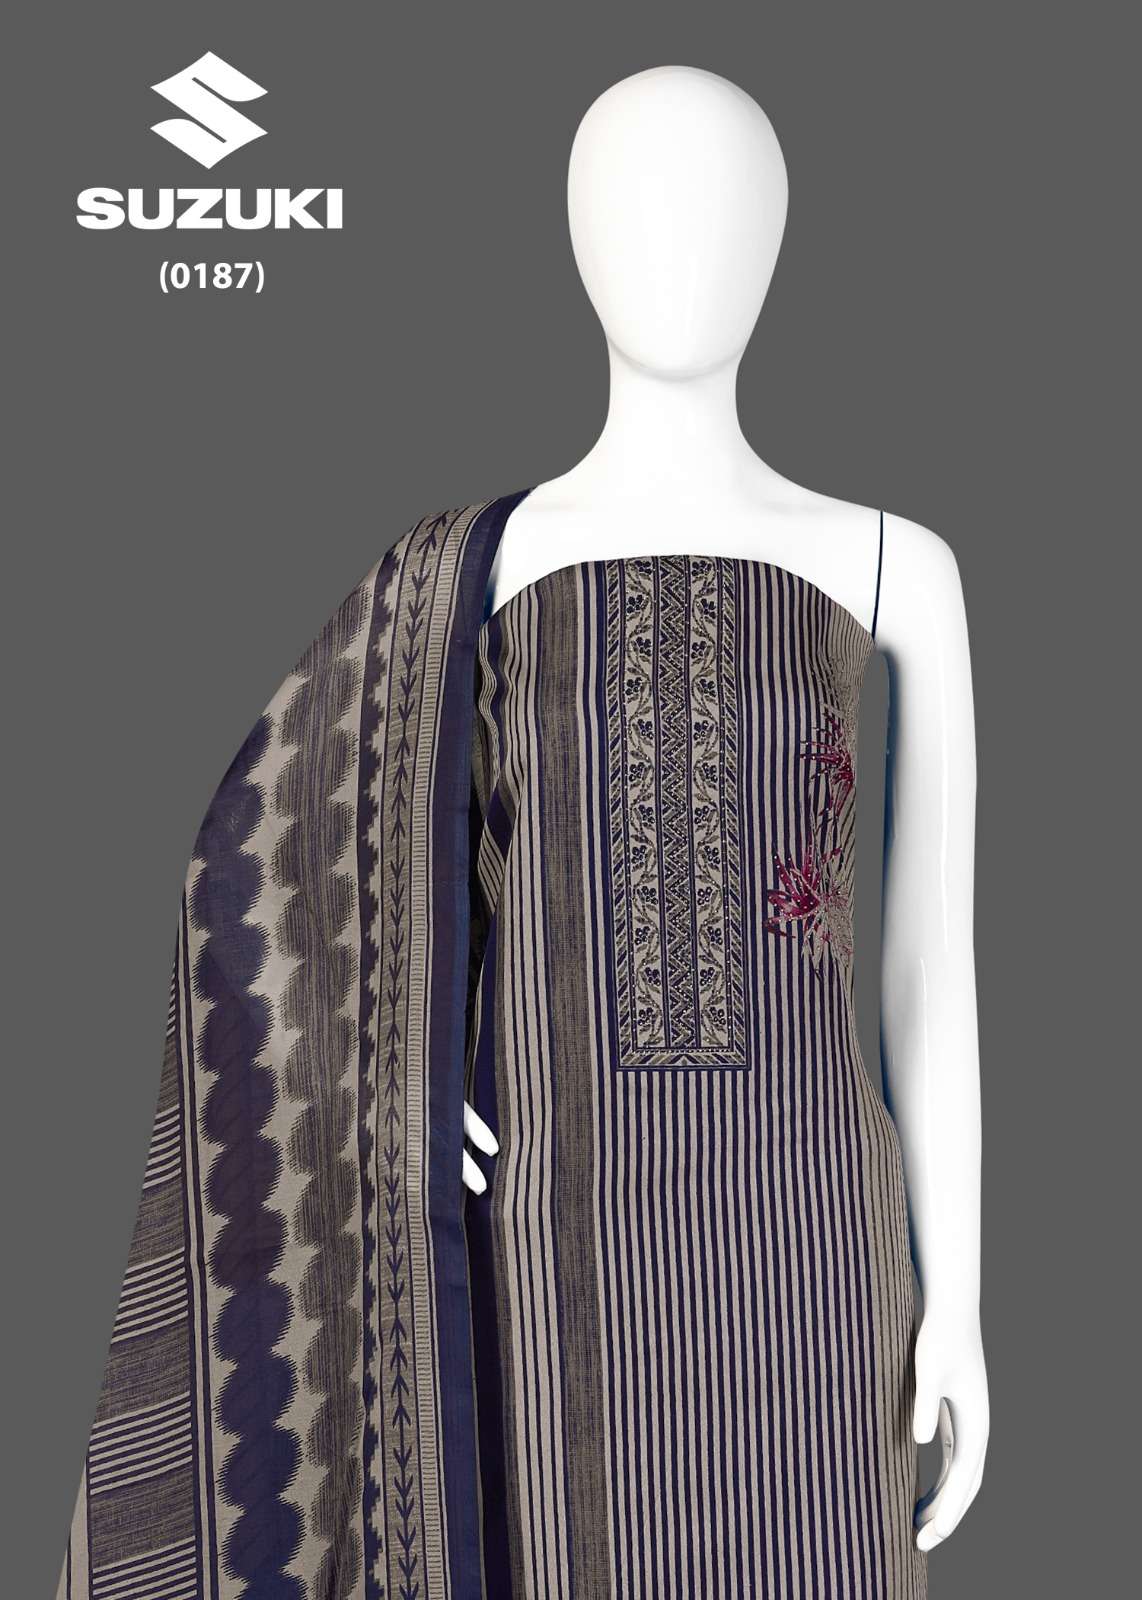 bipson prints suzuki 187 series trendy designer salwar suits catalogue online market suart